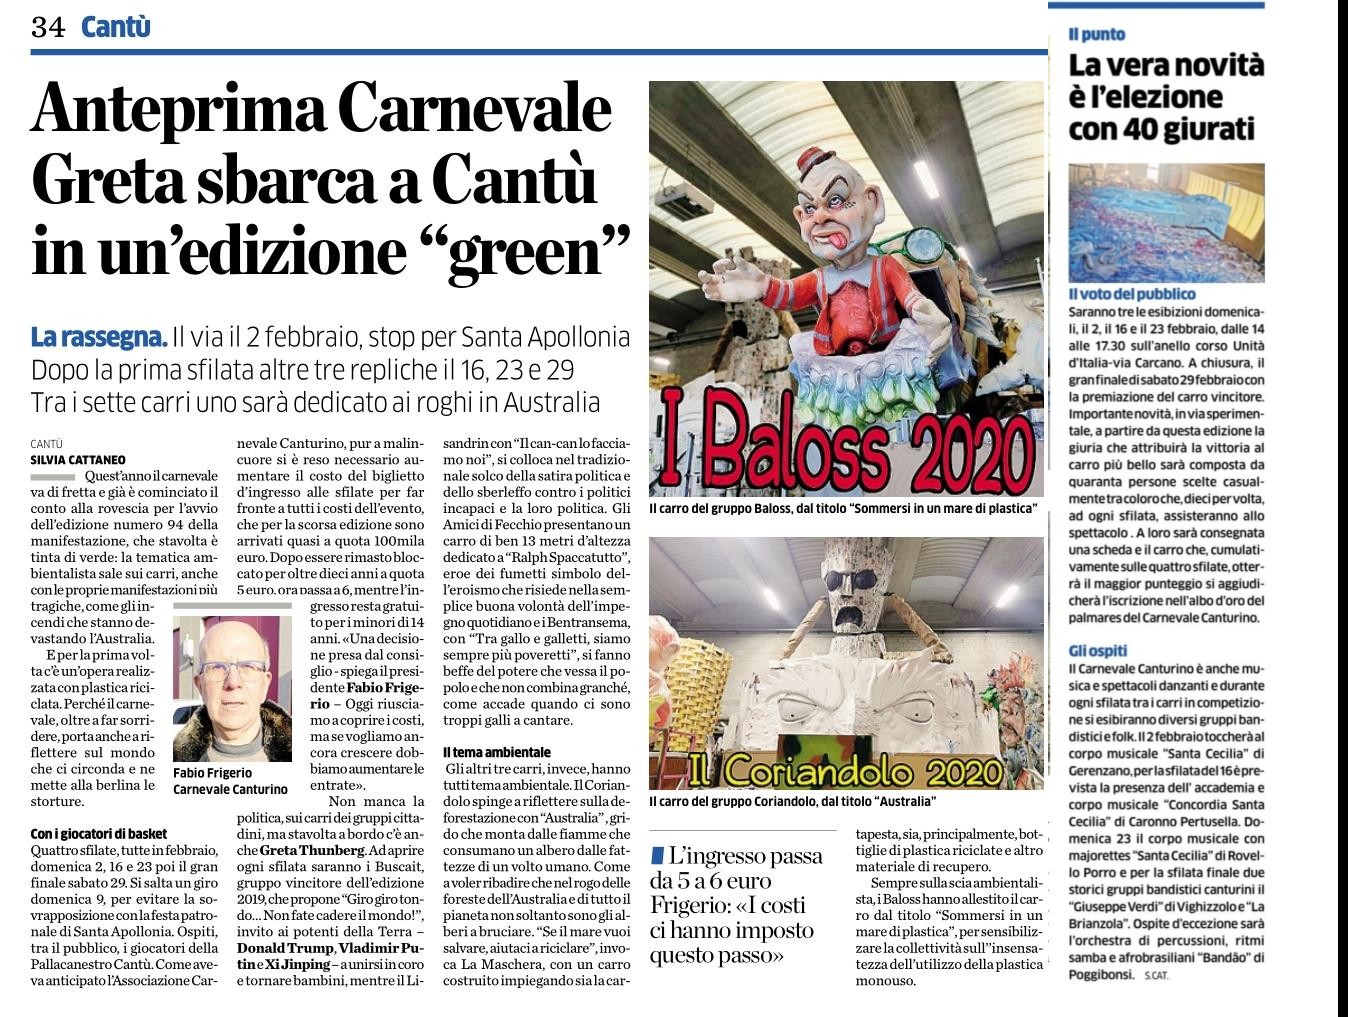 Anteprima Carnevale Greta sbarca a Cantù in un edizione “green”